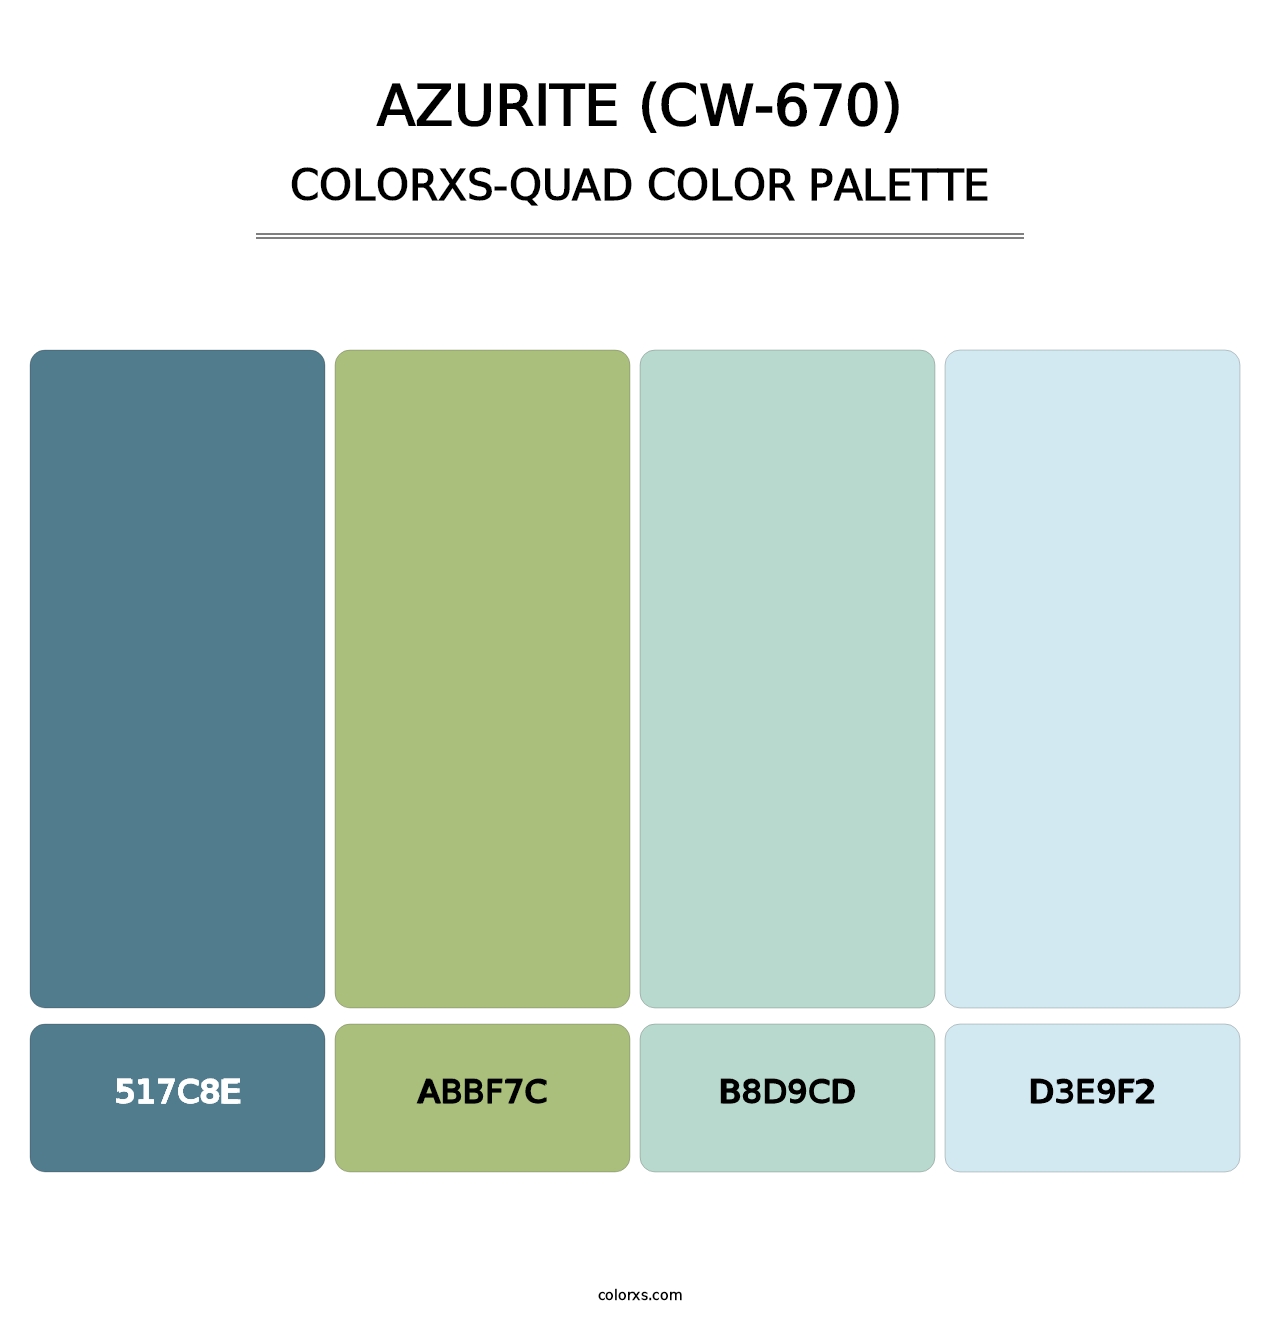 Azurite (CW-670) - Colorxs Quad Palette